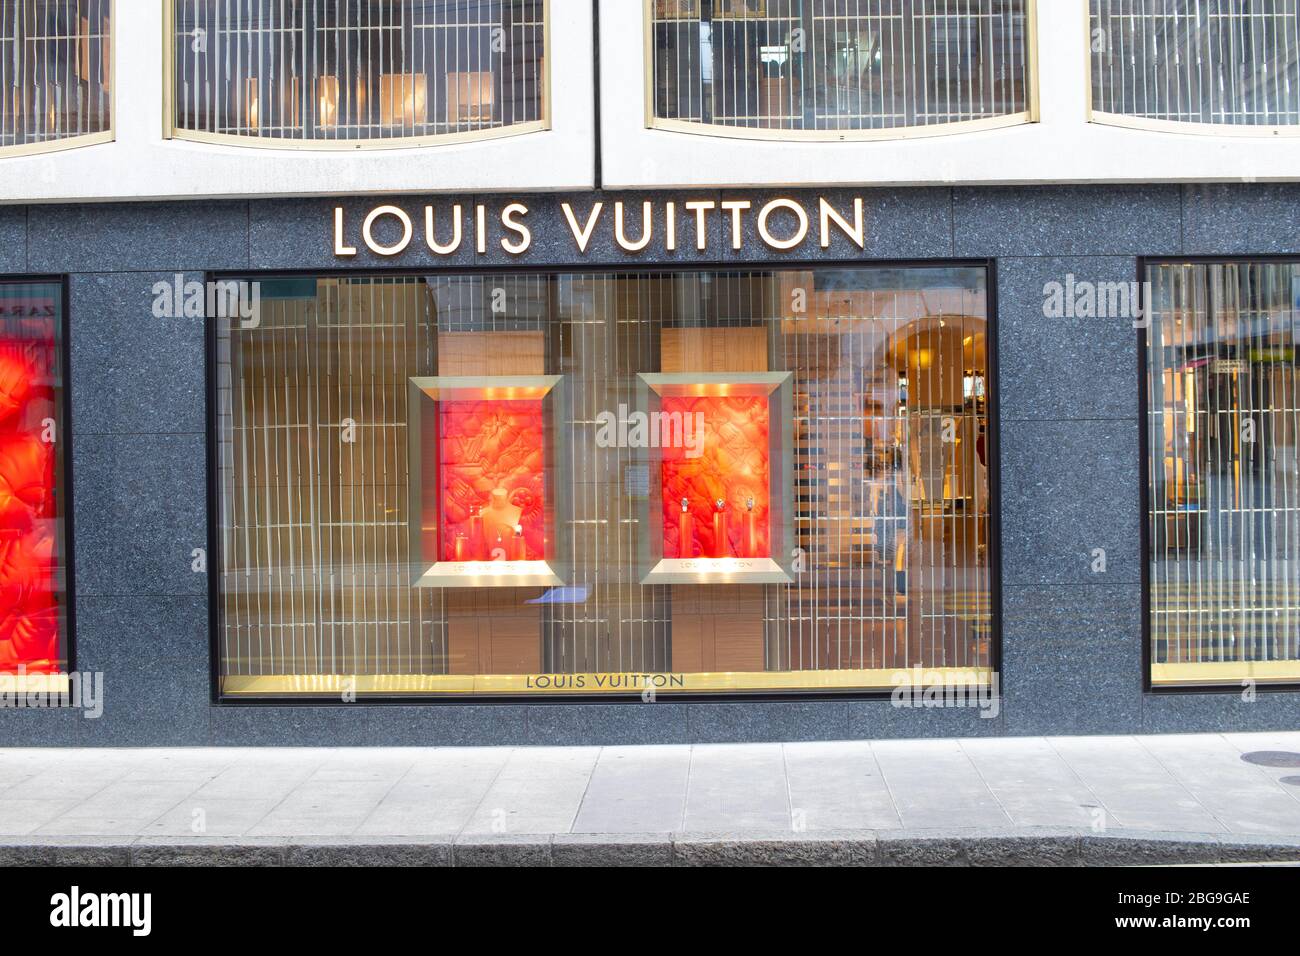 Honolulu - August 7, 2014: Louis Vuitton Window Display With